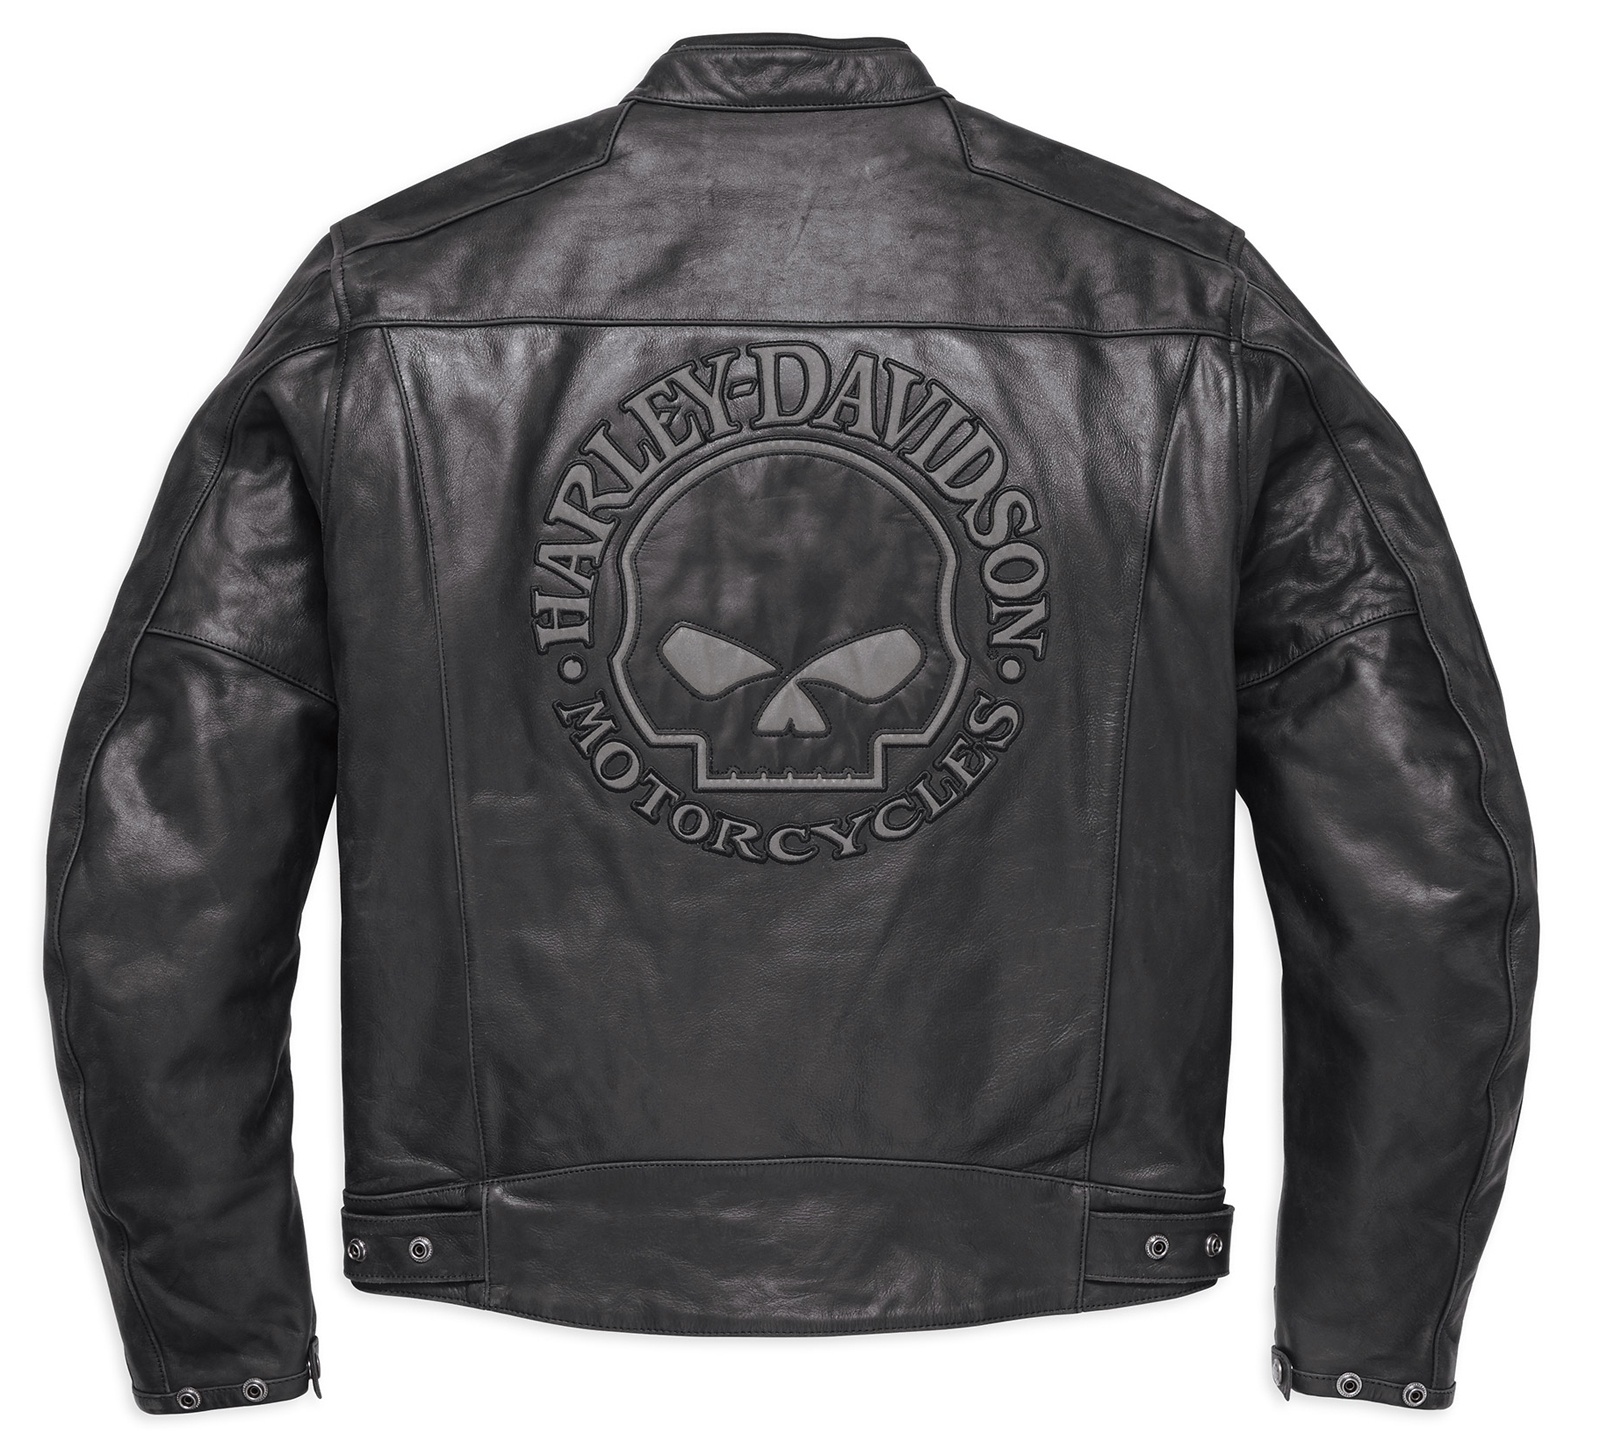 Harley Davidson Leather Jacket Clearance - 0